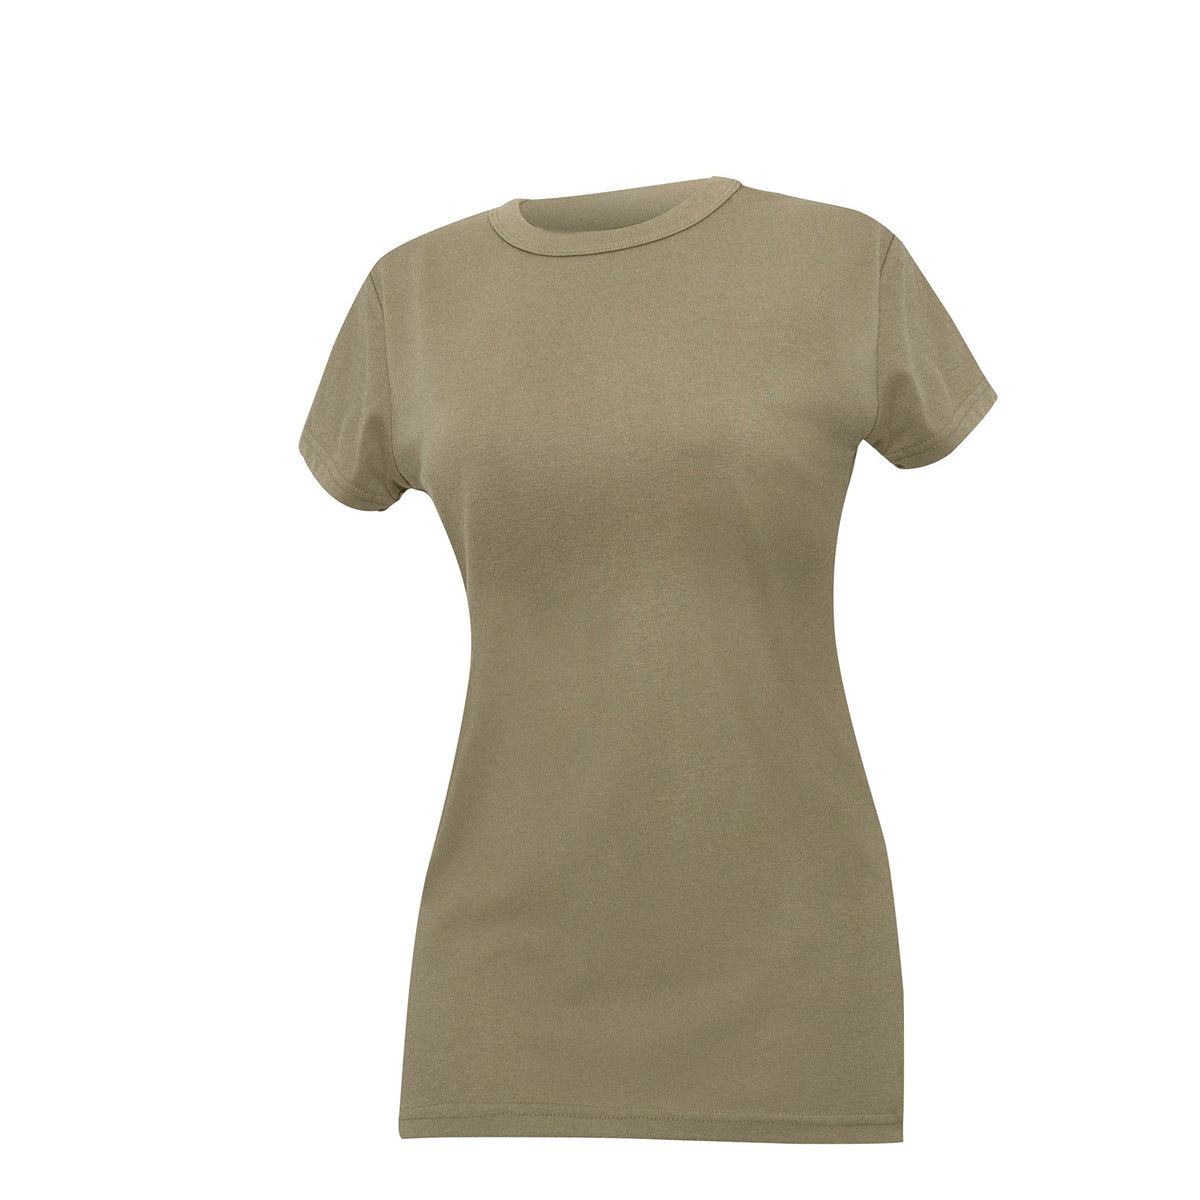 Rothco Womens Longer T-shirt - Coyote Brown